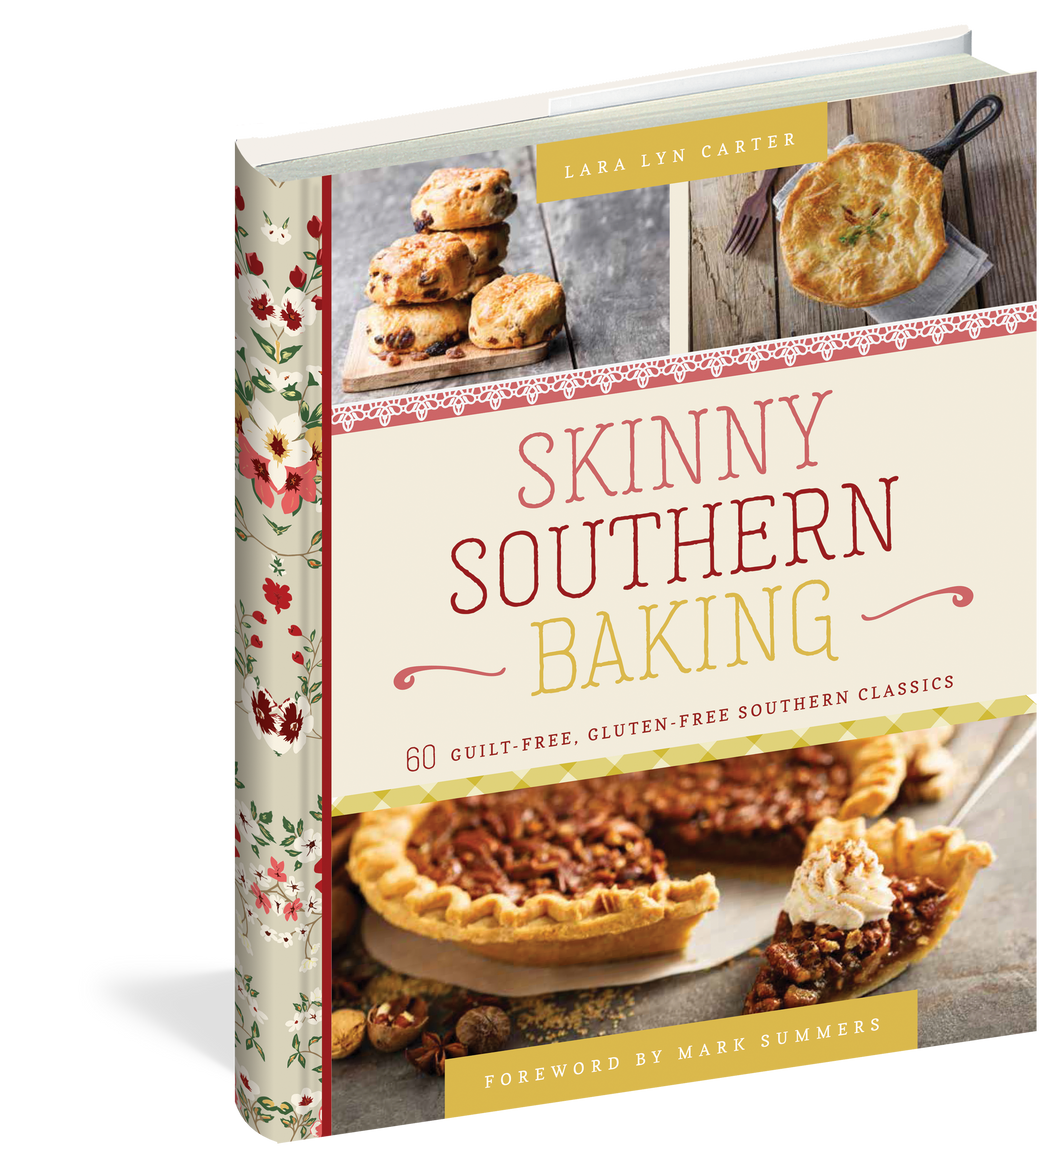 Skinny Southern Baking